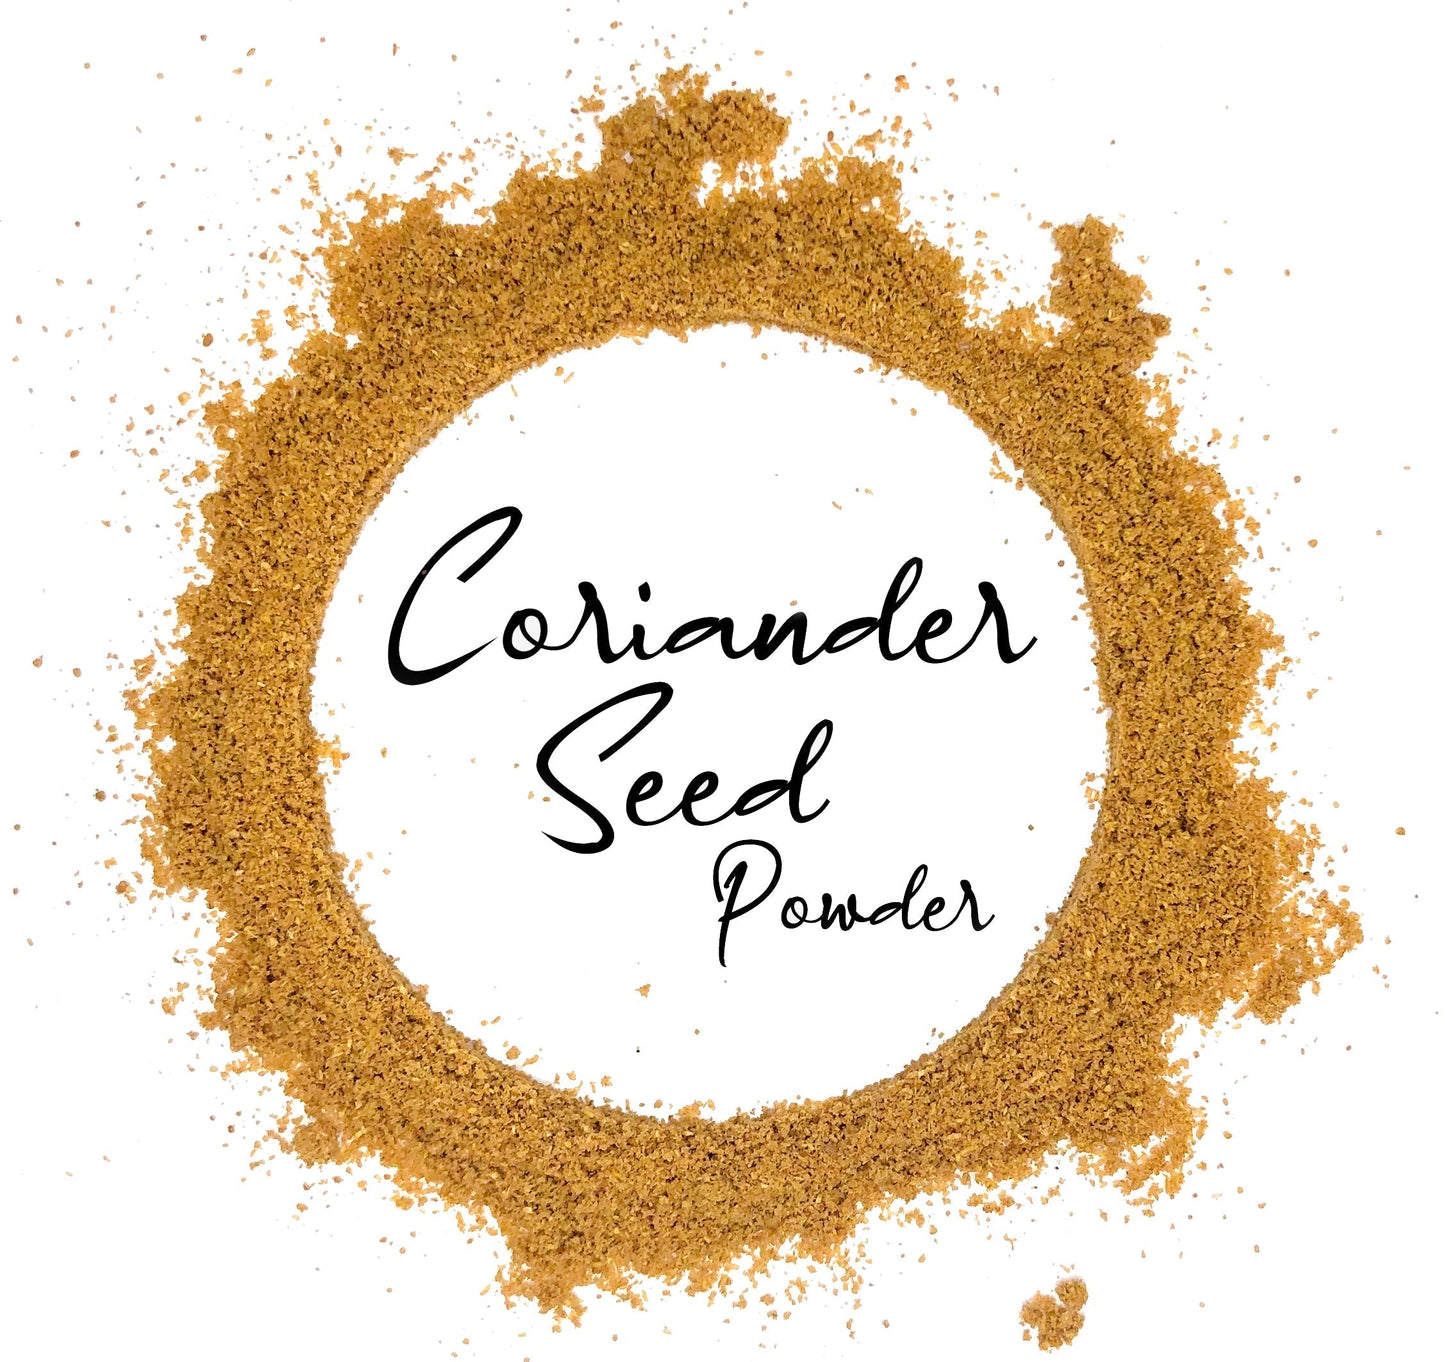 Wholesale Spices & Herbs - Coriander Seed Powder, Organic 3.5oz(101.3g) Jar